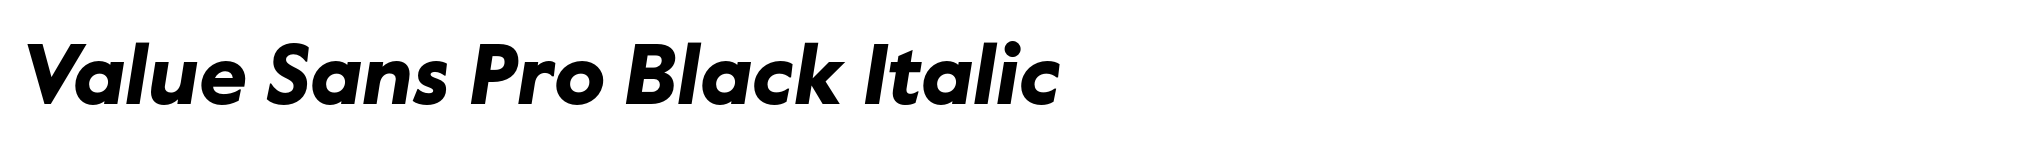 Value Sans Pro Black Italic image